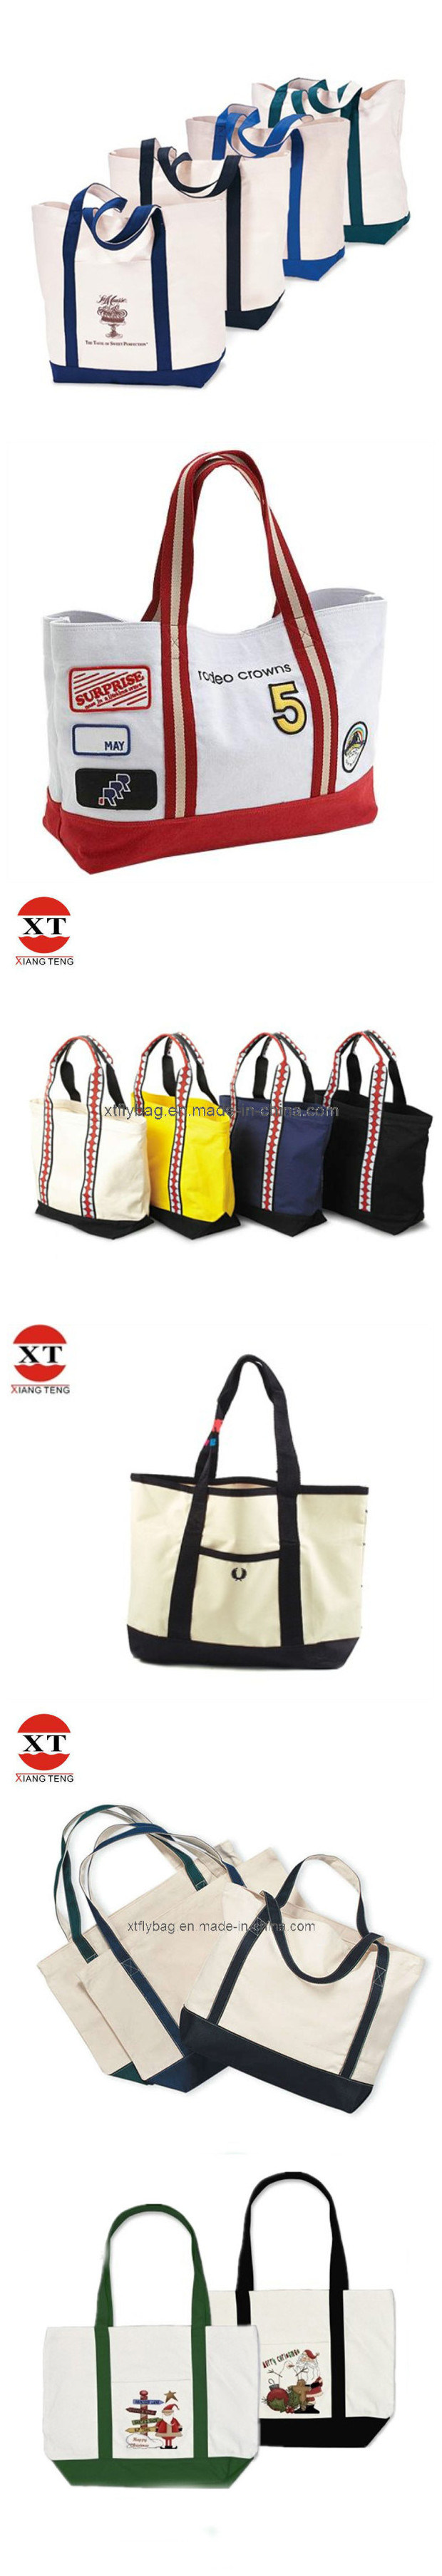 Fashion Canvas Tote Bag, Promotional Cotton Bag, Cotton Canvas Tote Bag